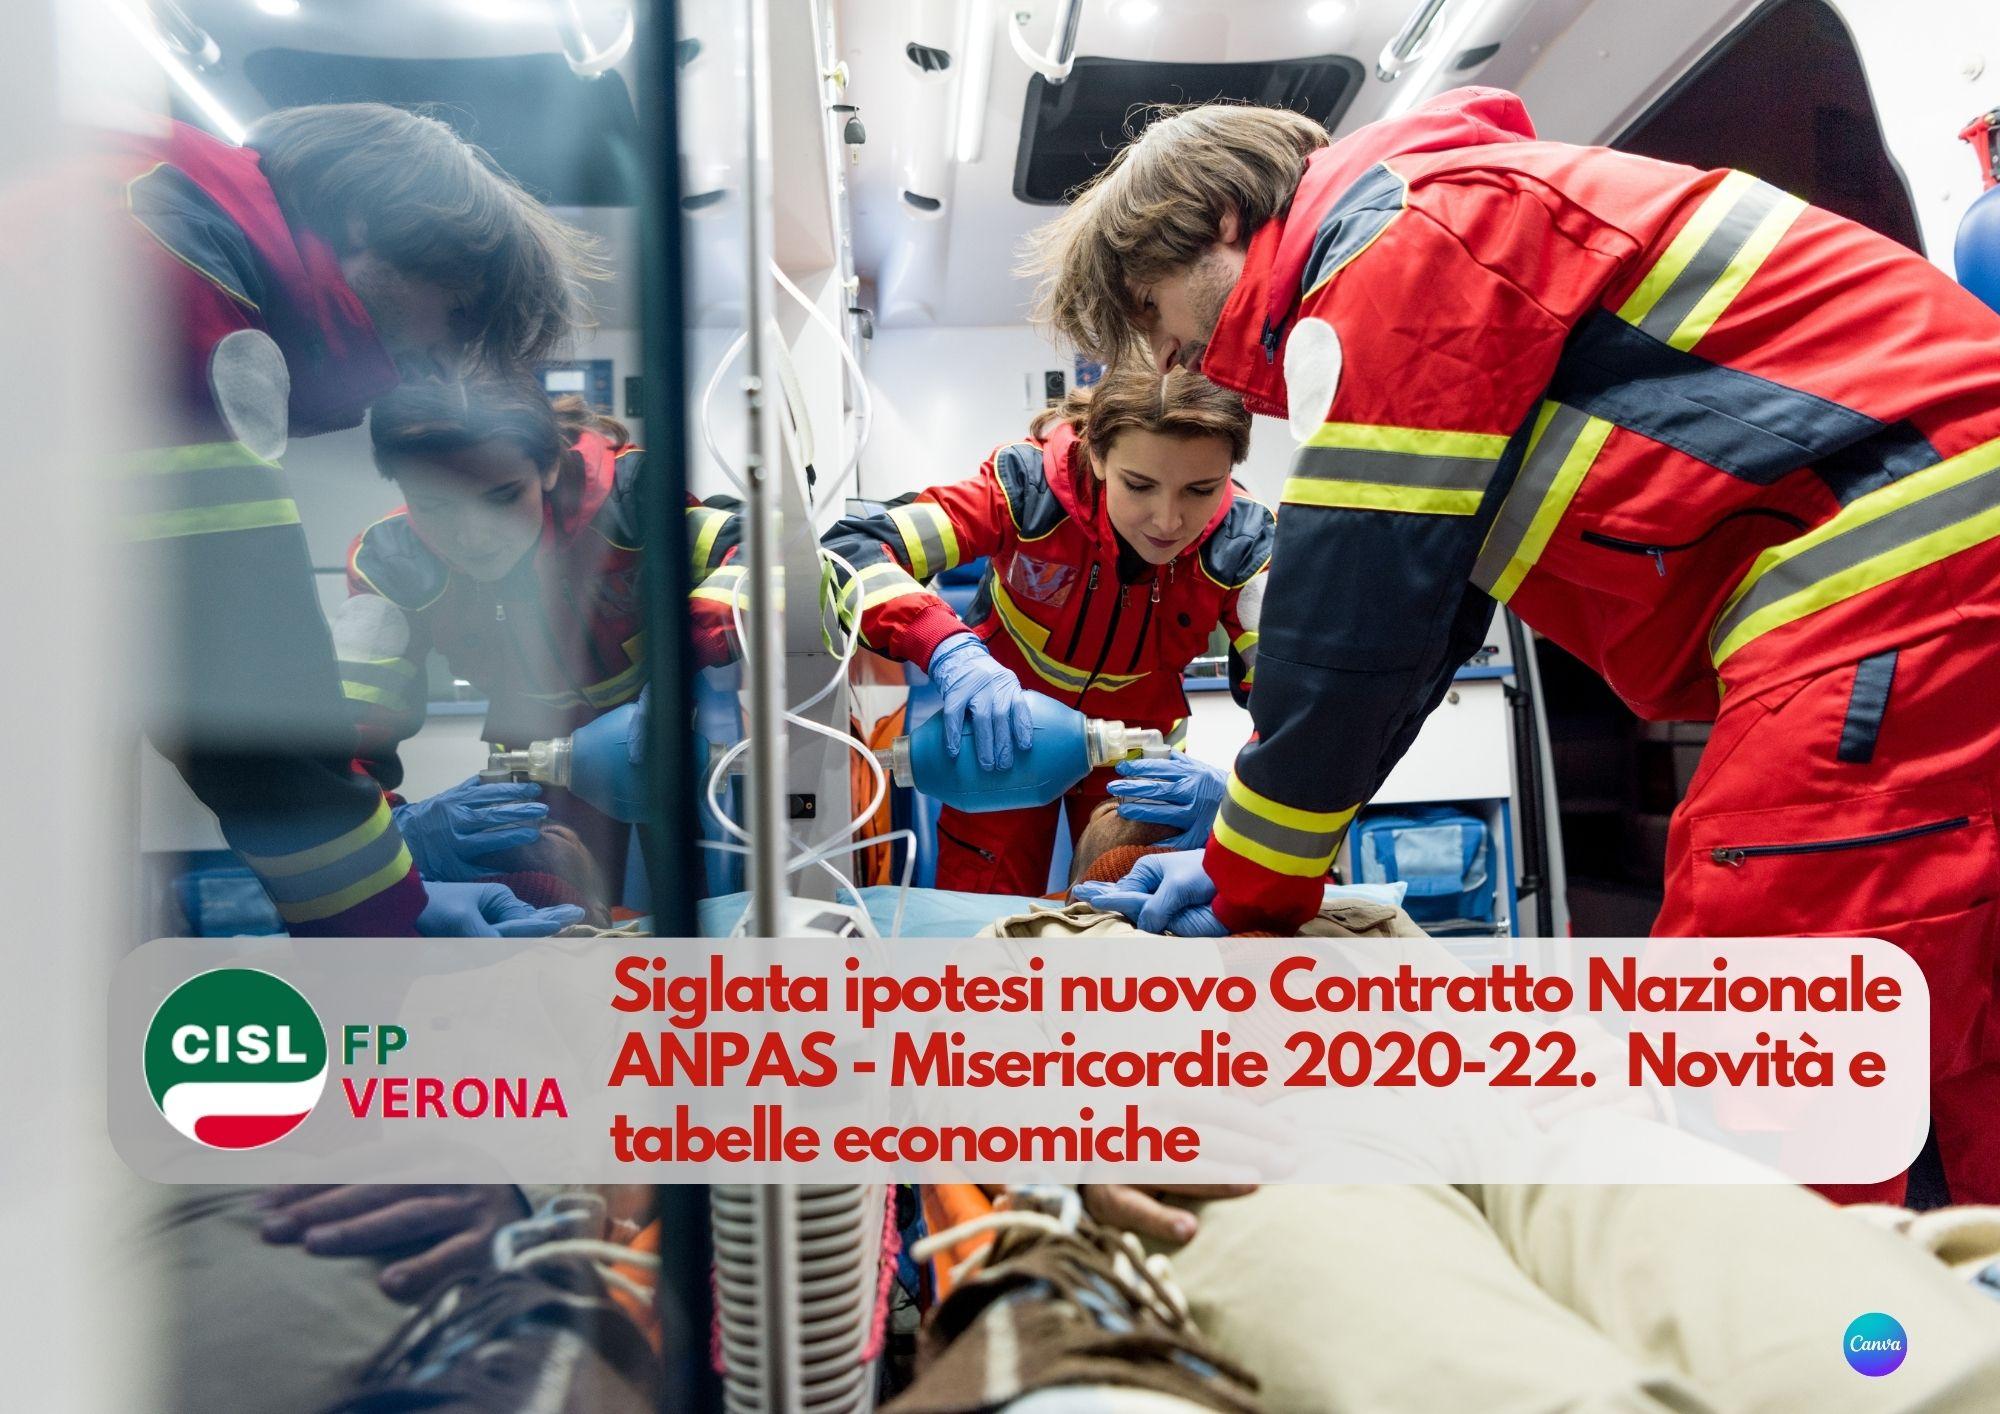 CISL FP Verona. Siglata ipotesi nuovo Contratto Nazionale ANPAS - Misericordie 2020-22